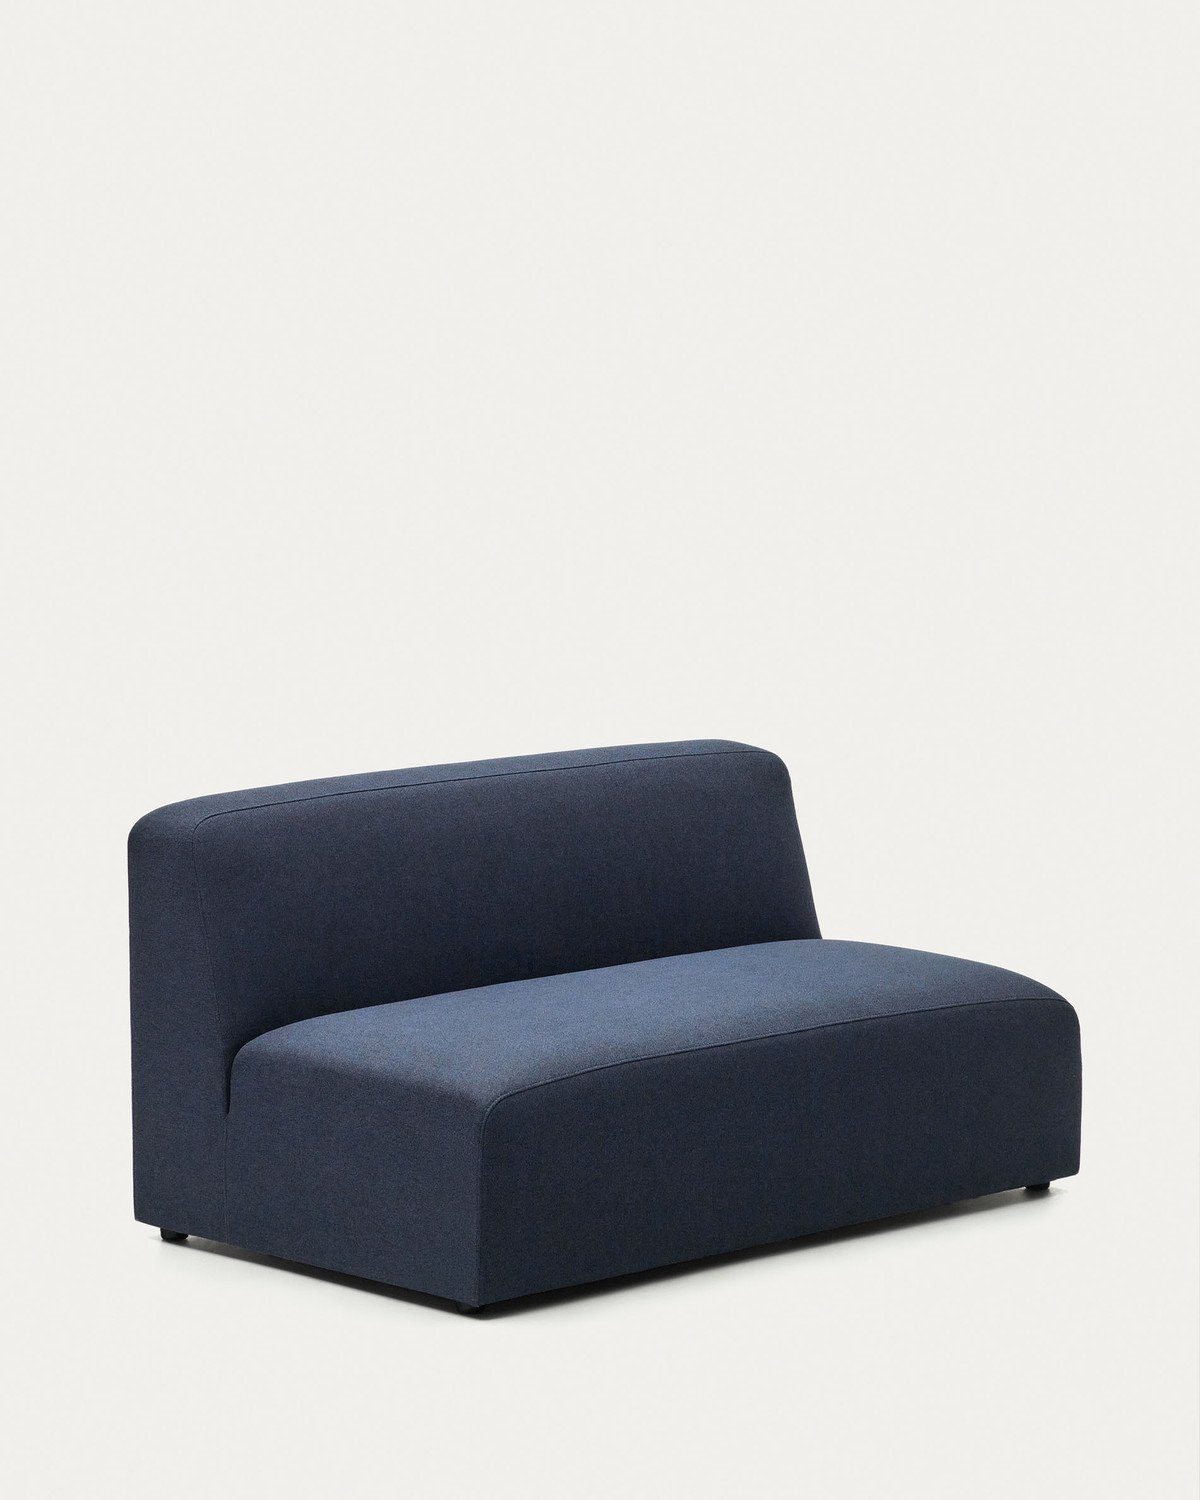 x 150x 78 cm Blau Modul Natur24 Neu Sofa Sitzgelegenheit Neom 89 2-Sitzer-Modul